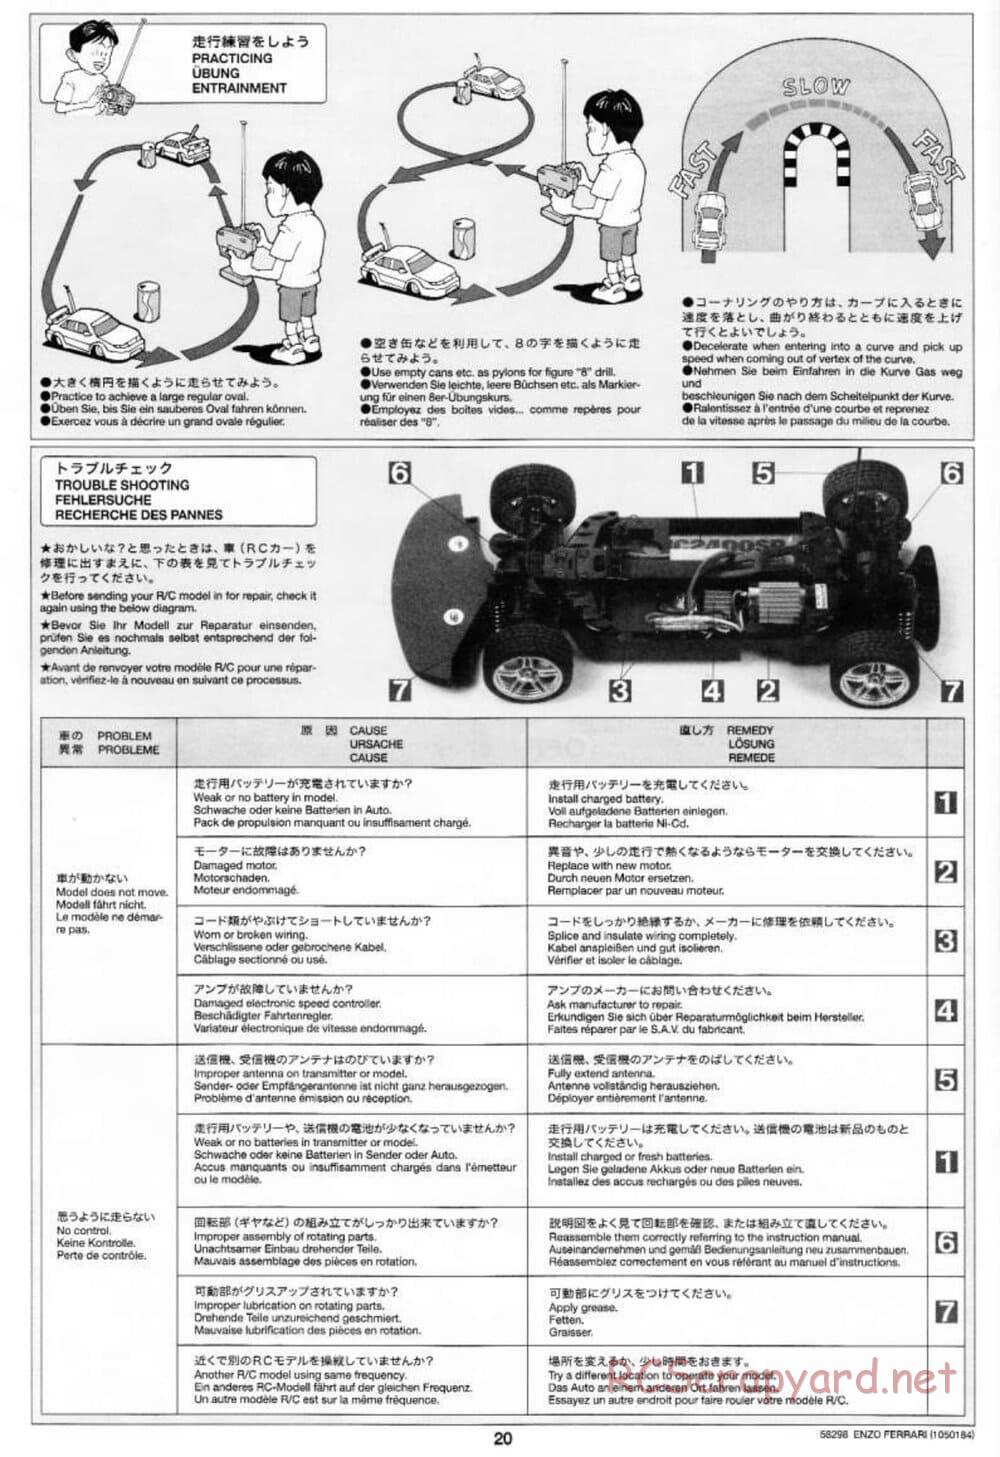 Tamiya - Enzo Ferrari - TB-01 Chassis - Manual - Page 20